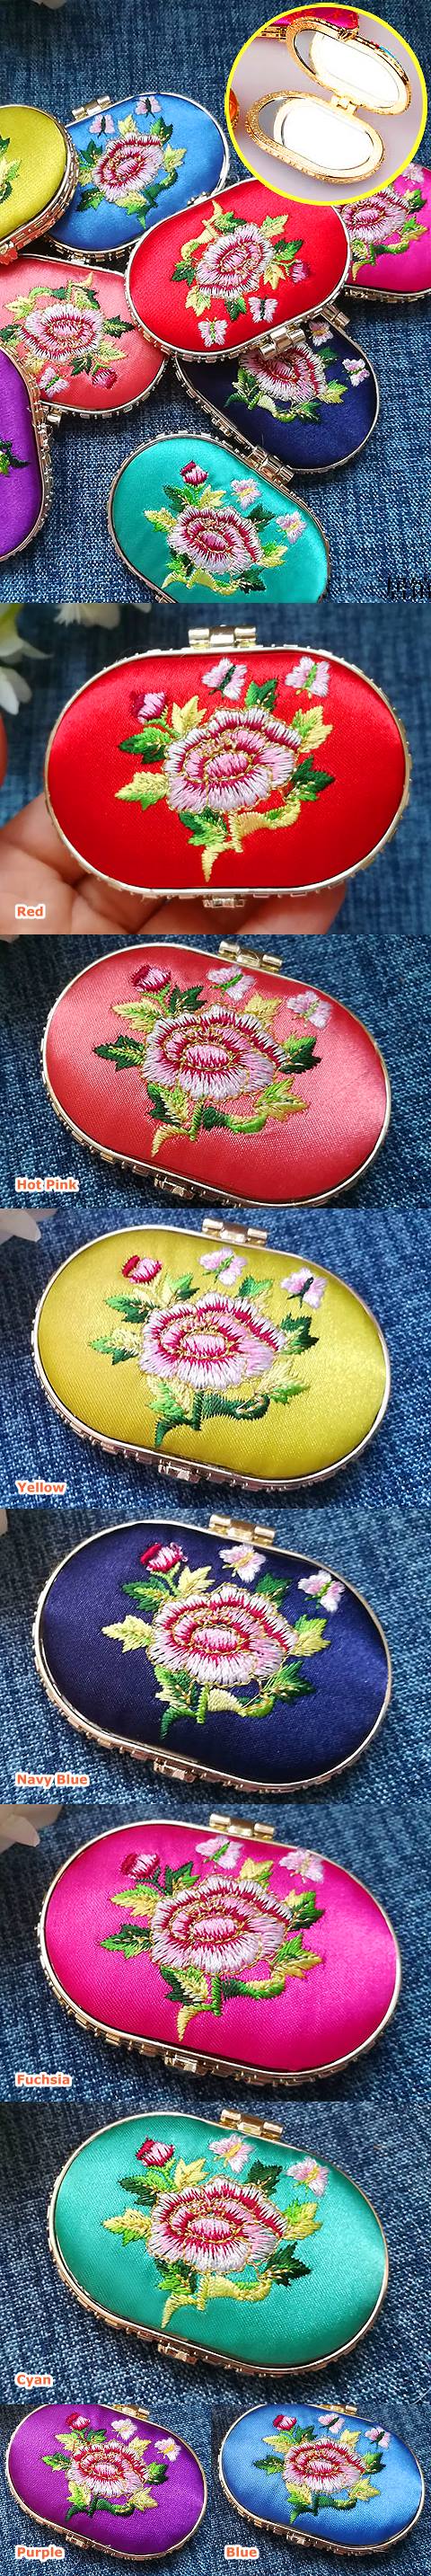 Mudan Peony Embroidery Compact Mirror (Multi-color)